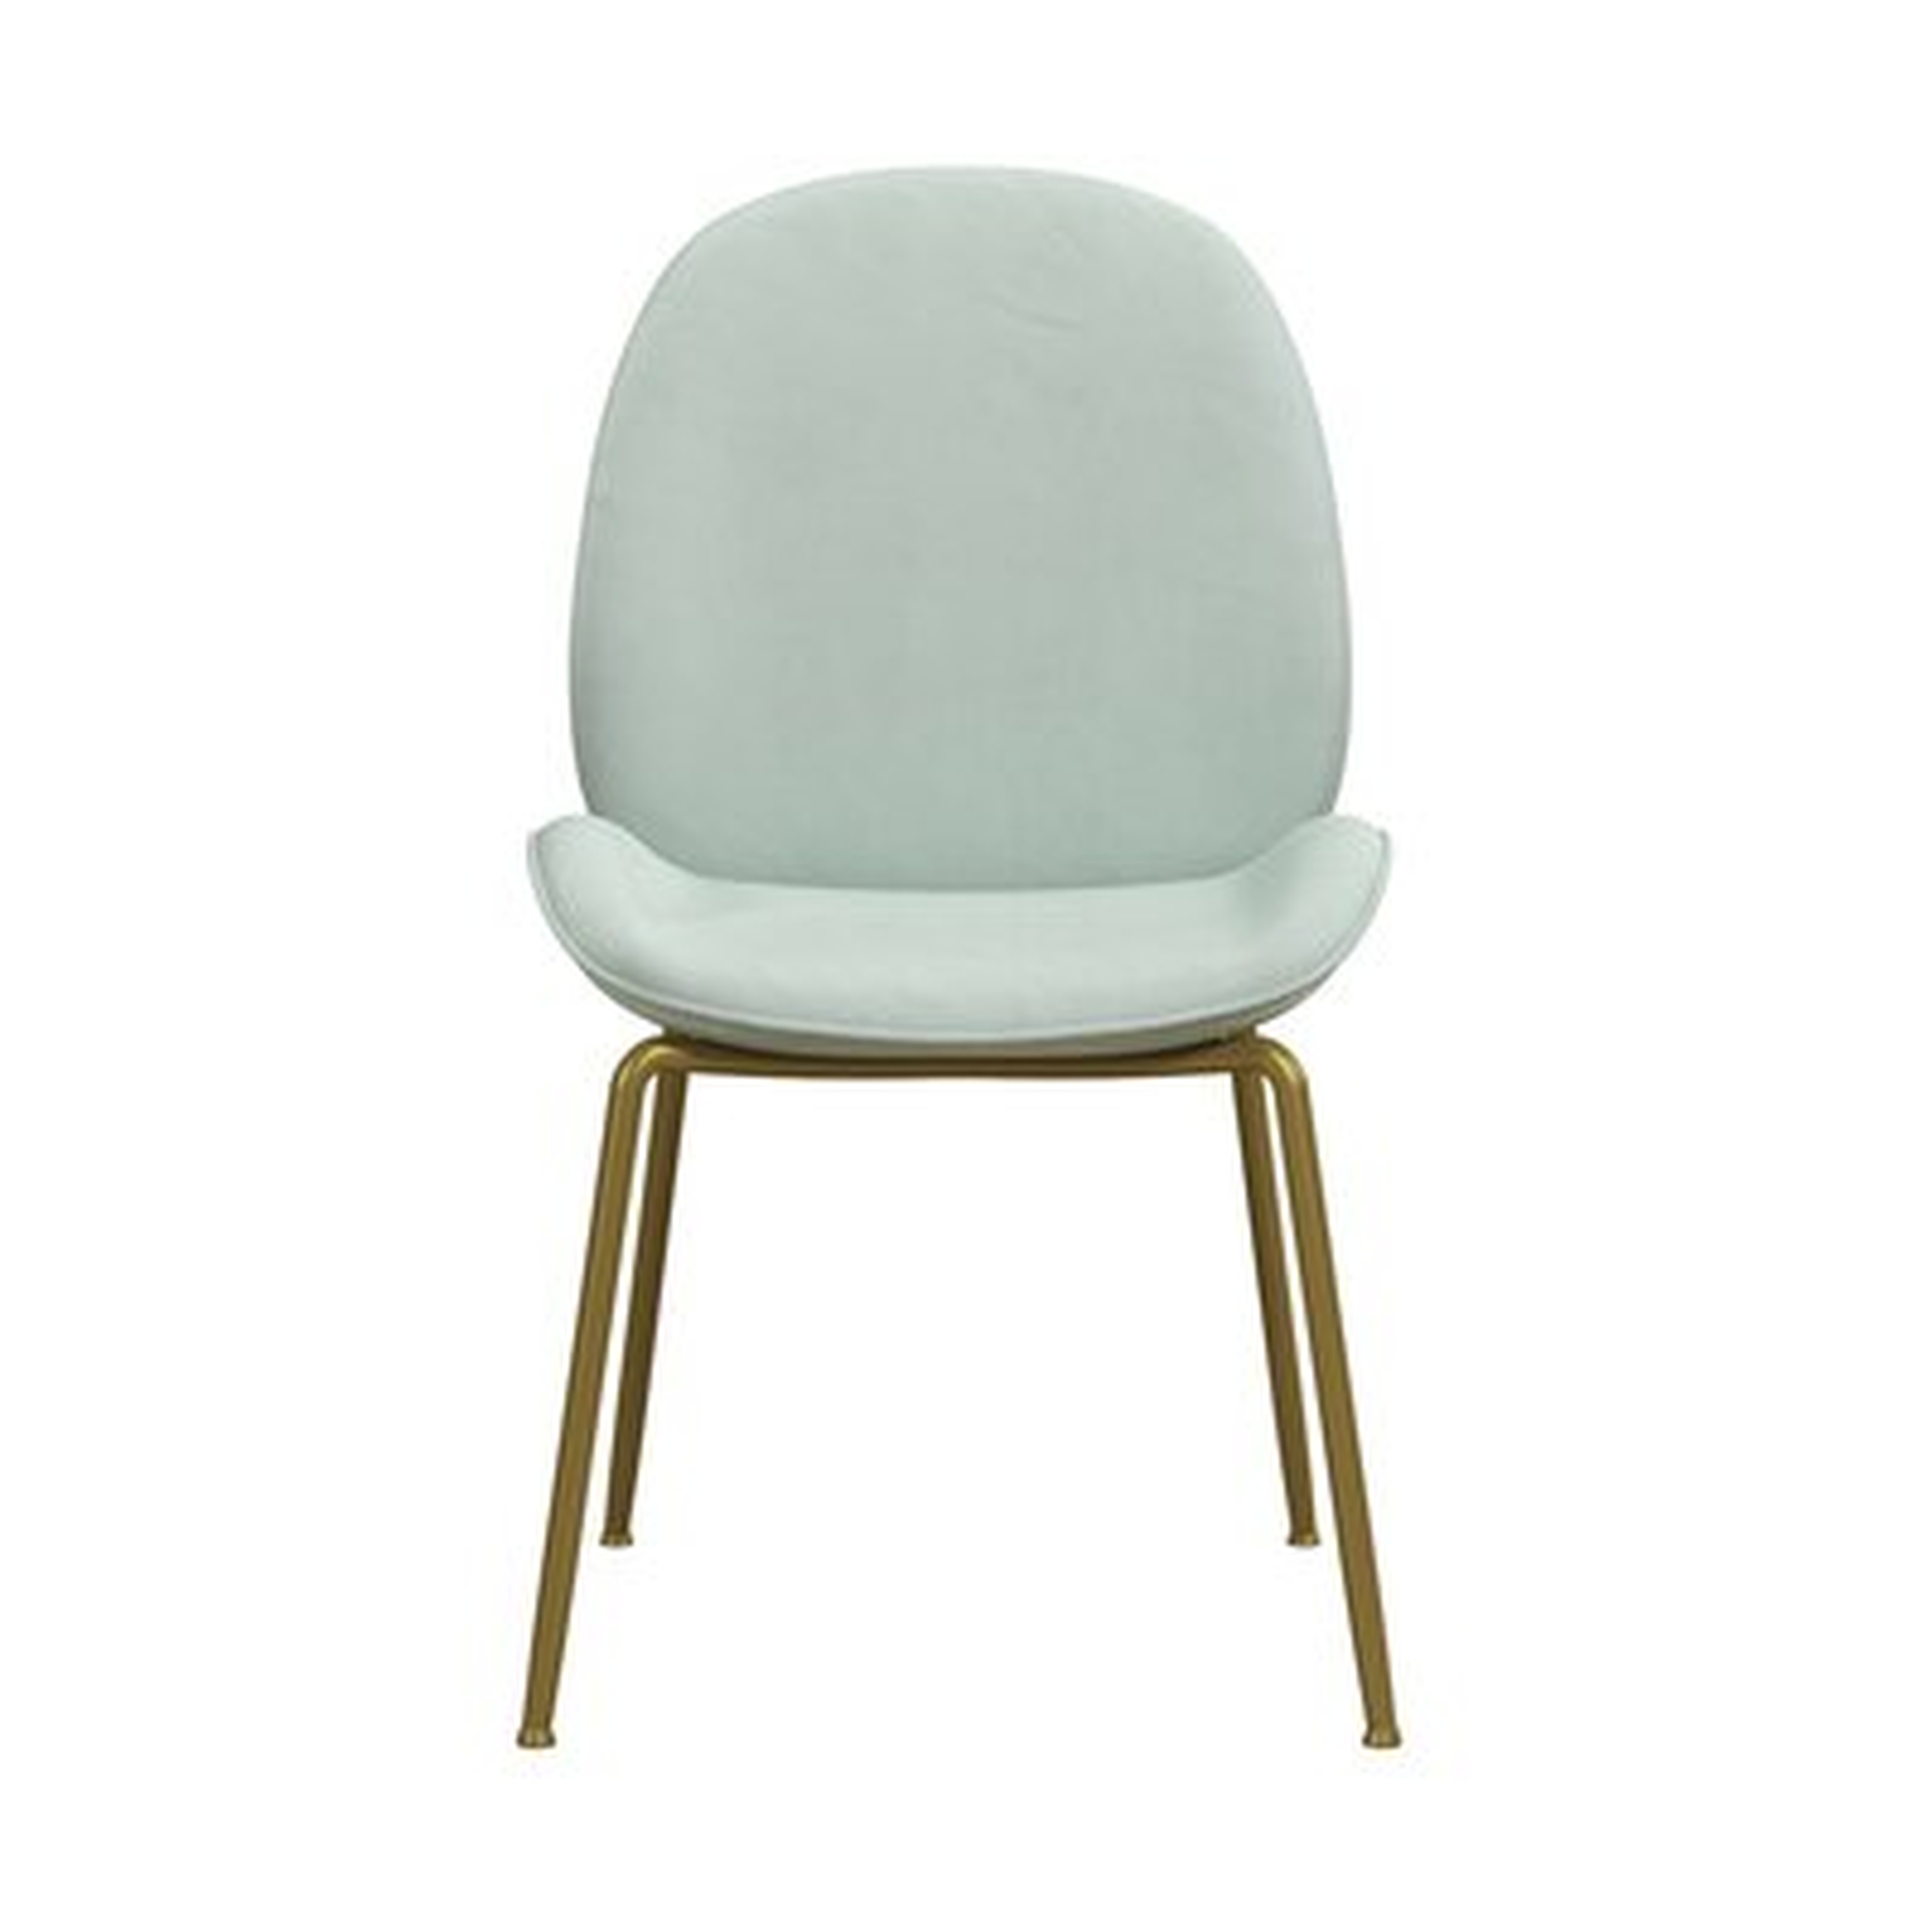 Astor Upholstered Dining Chair, Teal - Wayfair